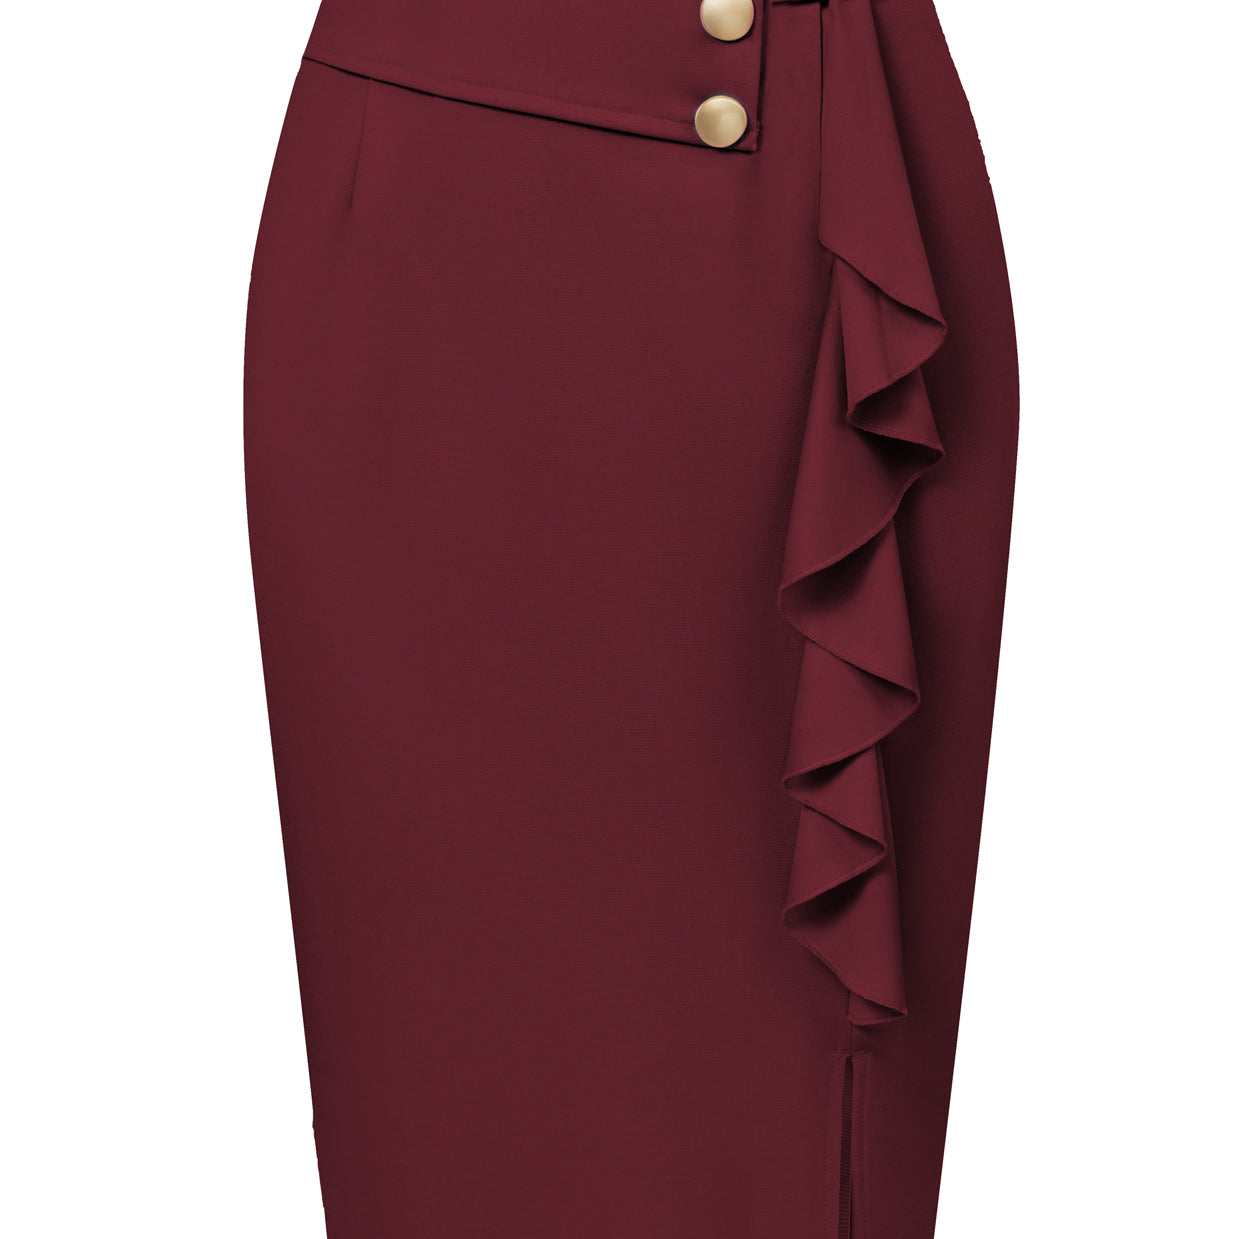 Seckill Offer⌛Front Slit Skirt High Waist Ruffle Decorated Bodycon Skirt